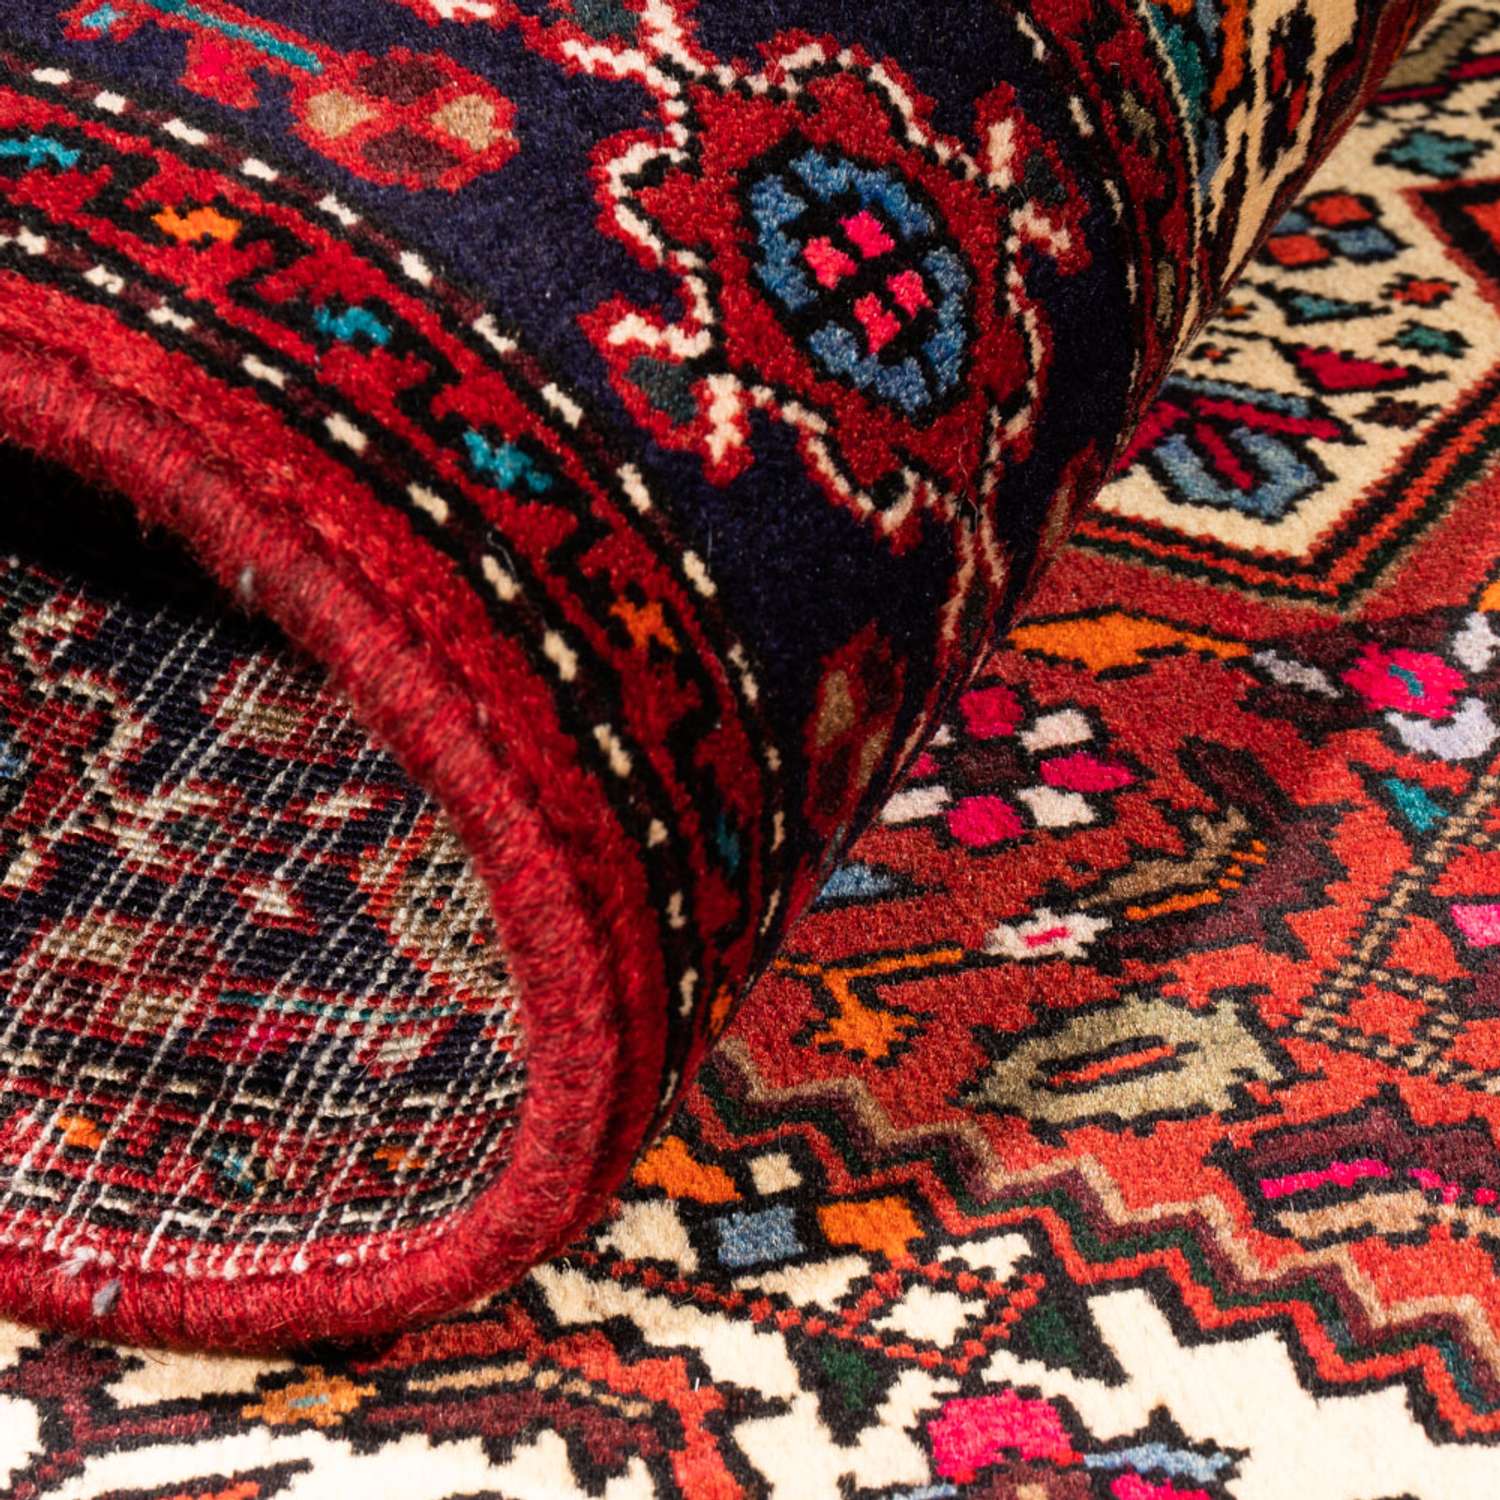 Persisk matta - Nomadic - 148 x 100 cm - röd